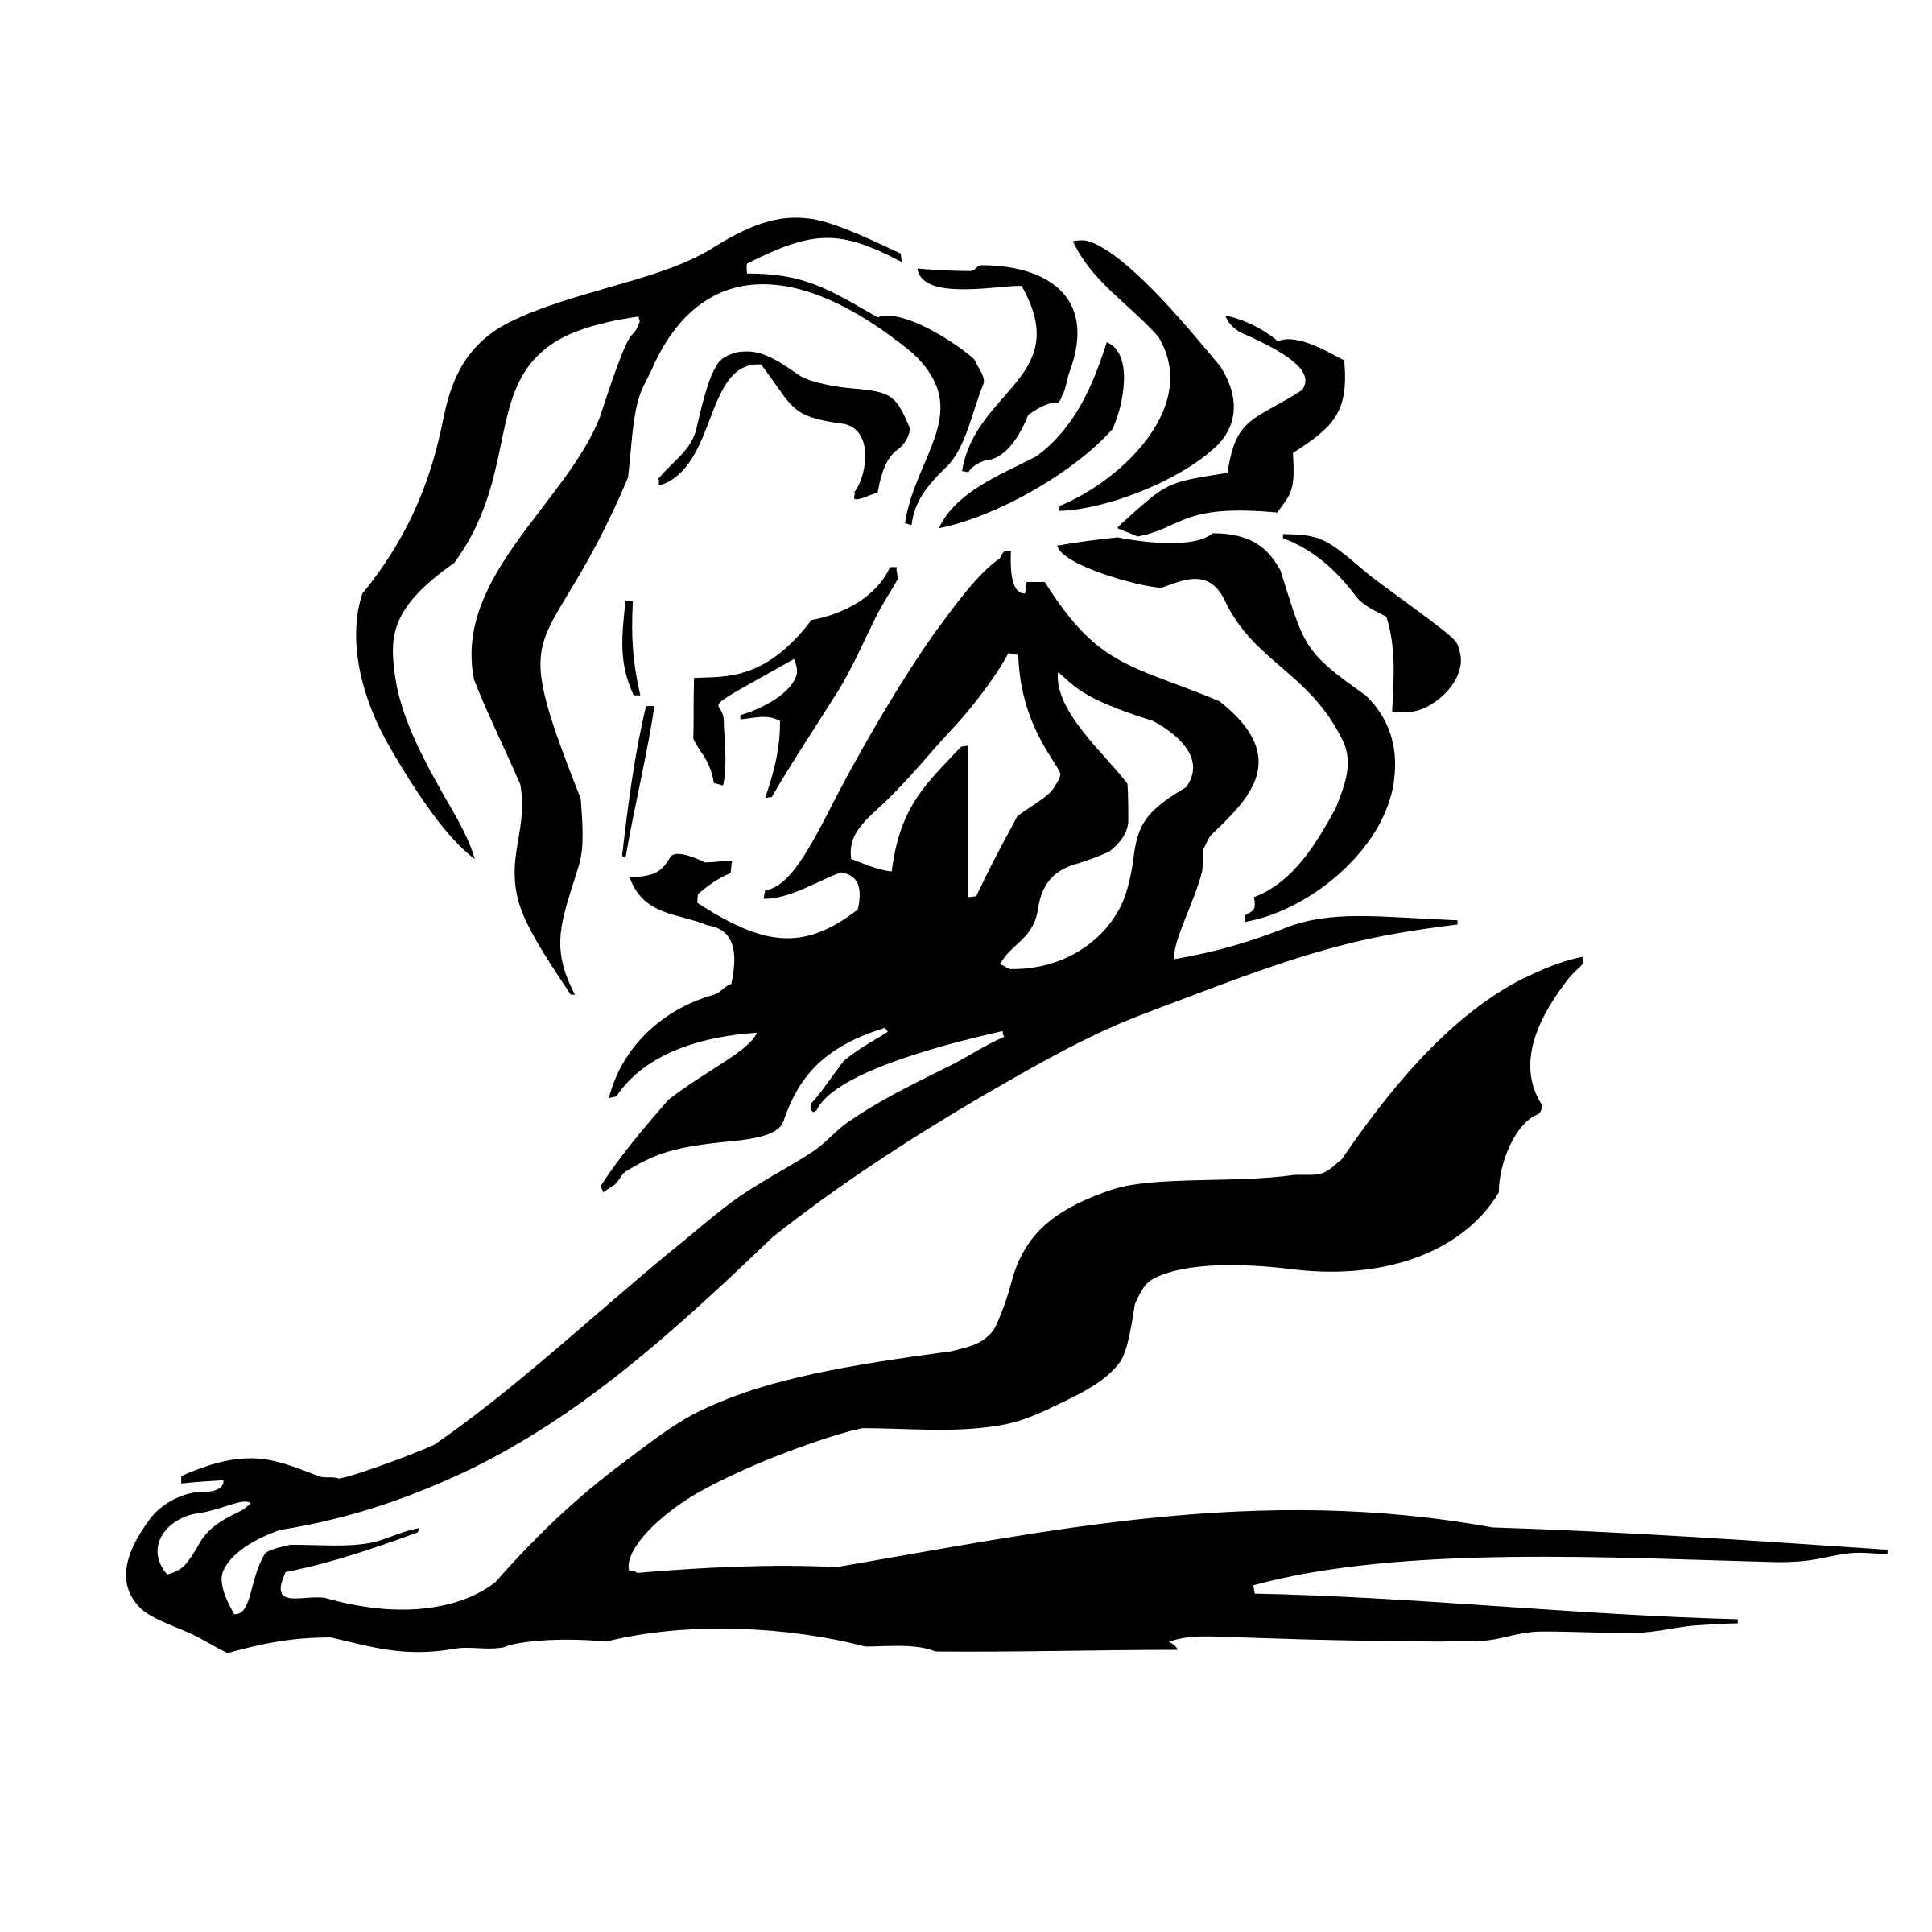 Cannes Lions Logo PNG Transparent & SVG Vector.